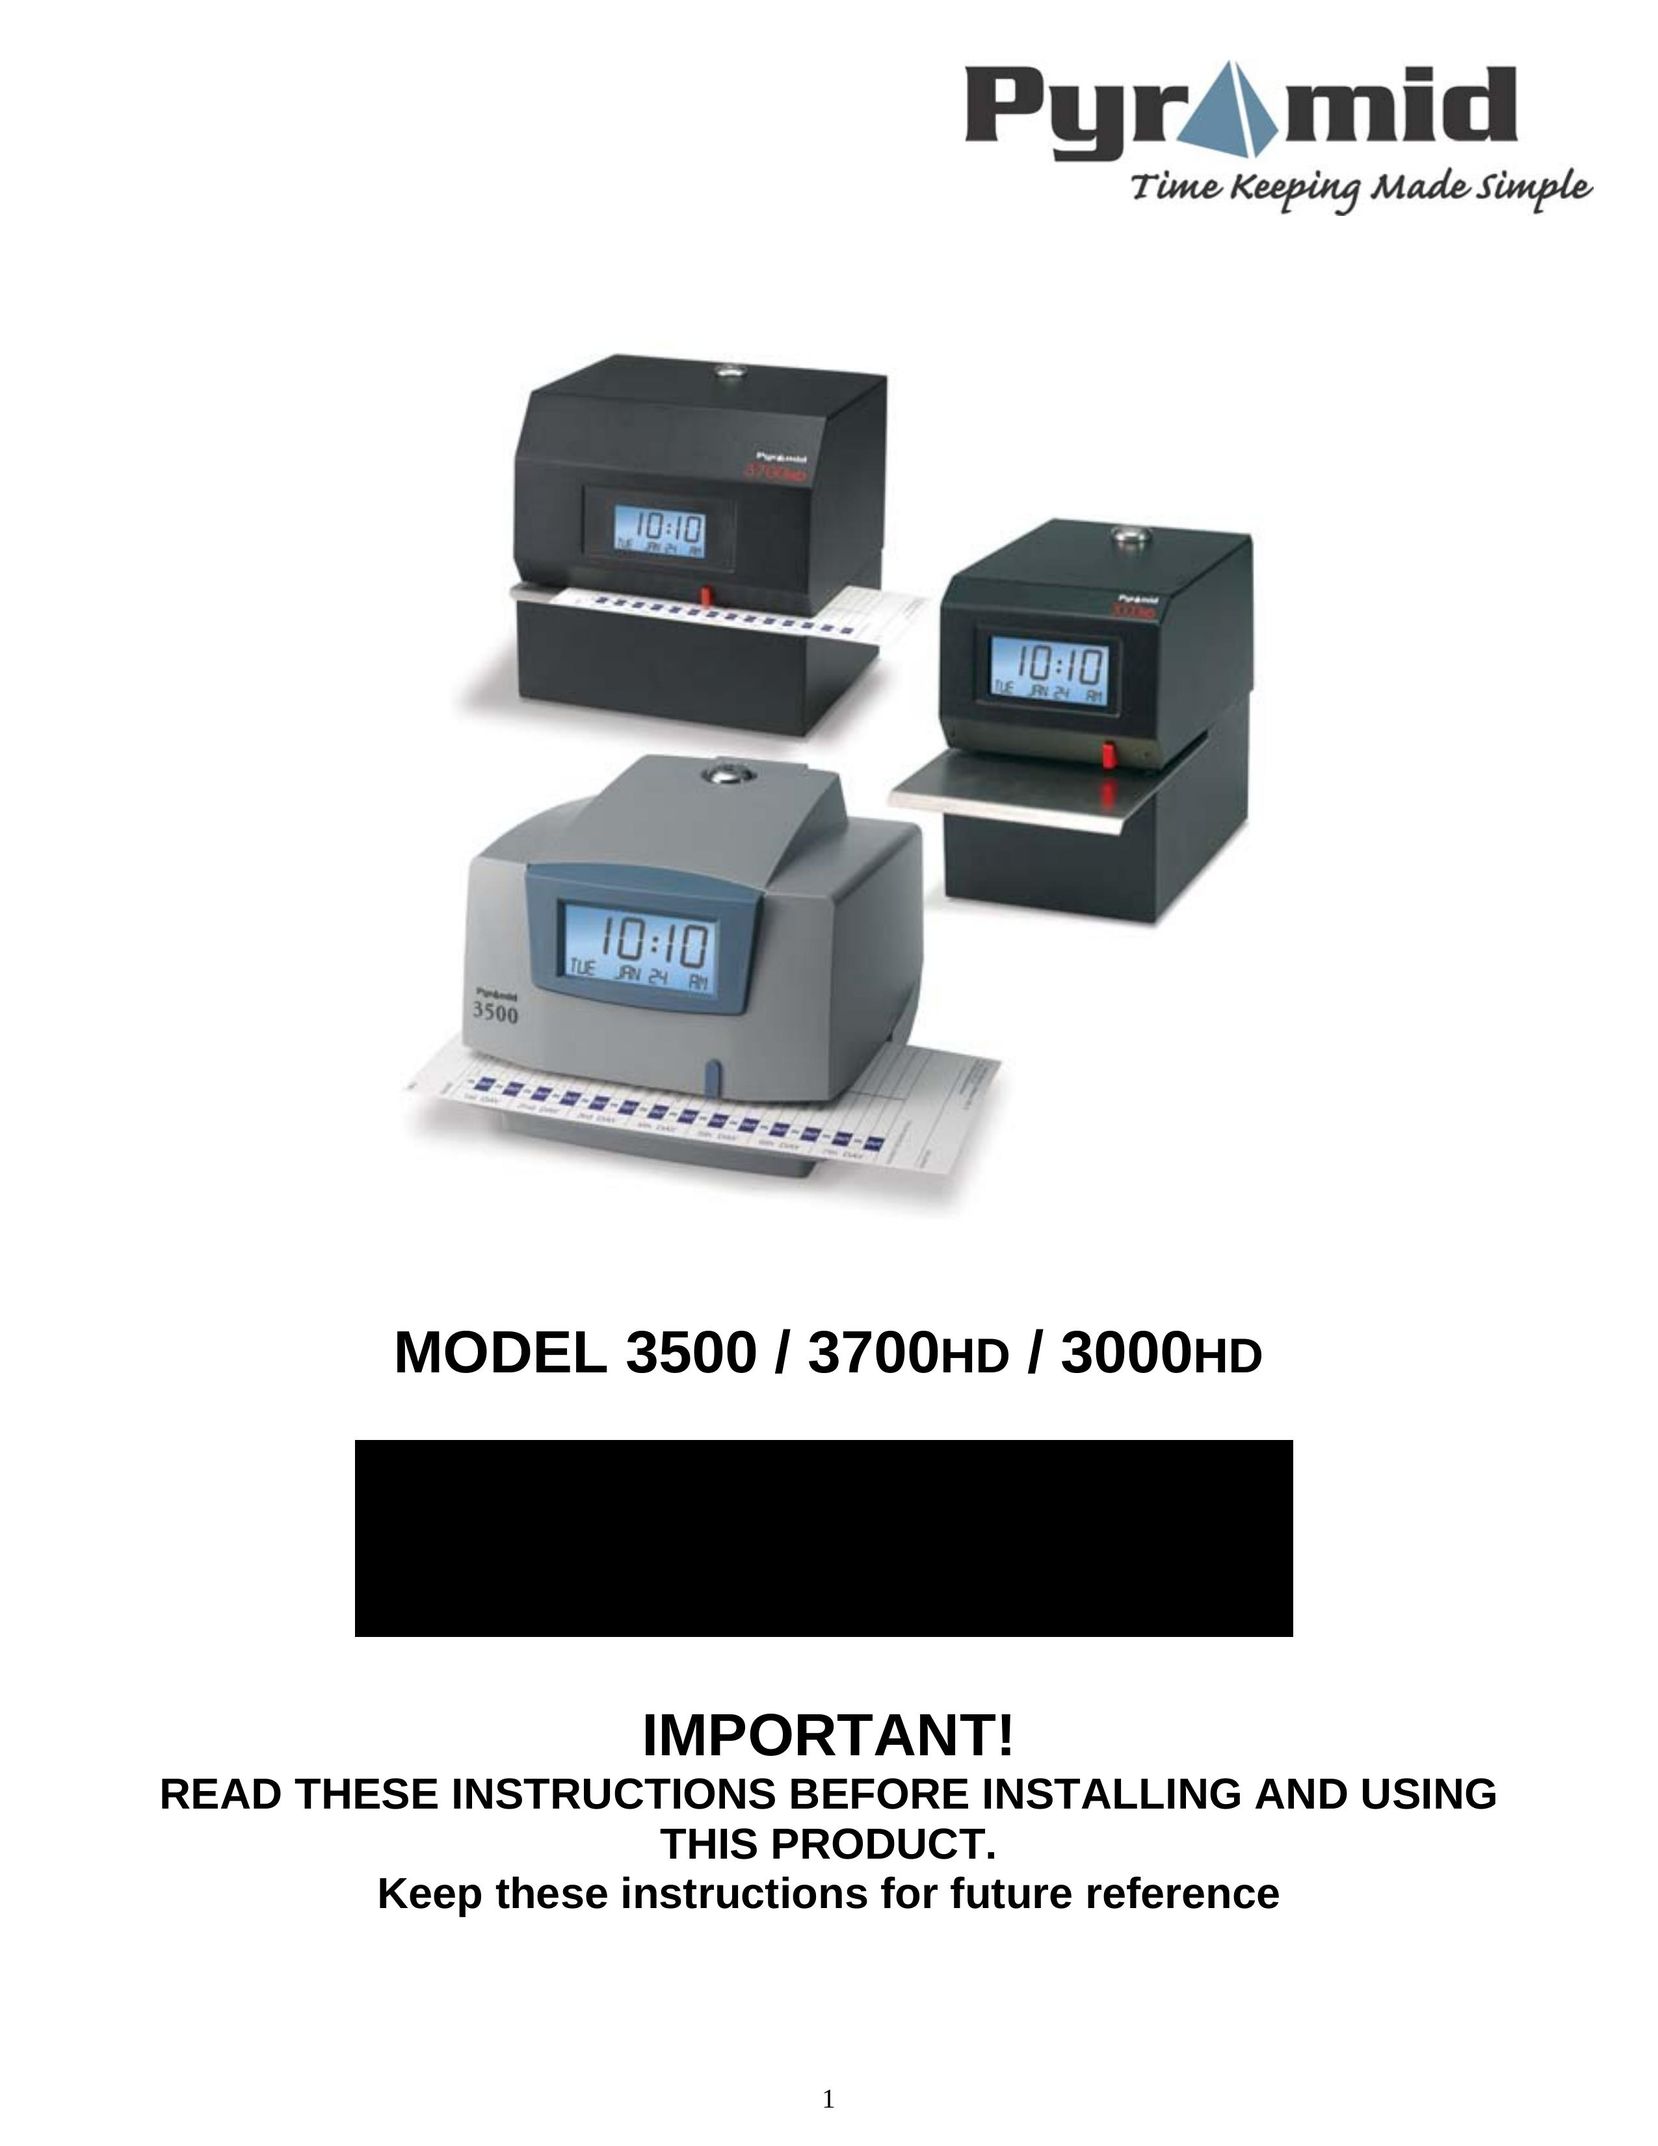 Pyramid Technologies 3000HD Time Clock User Manual